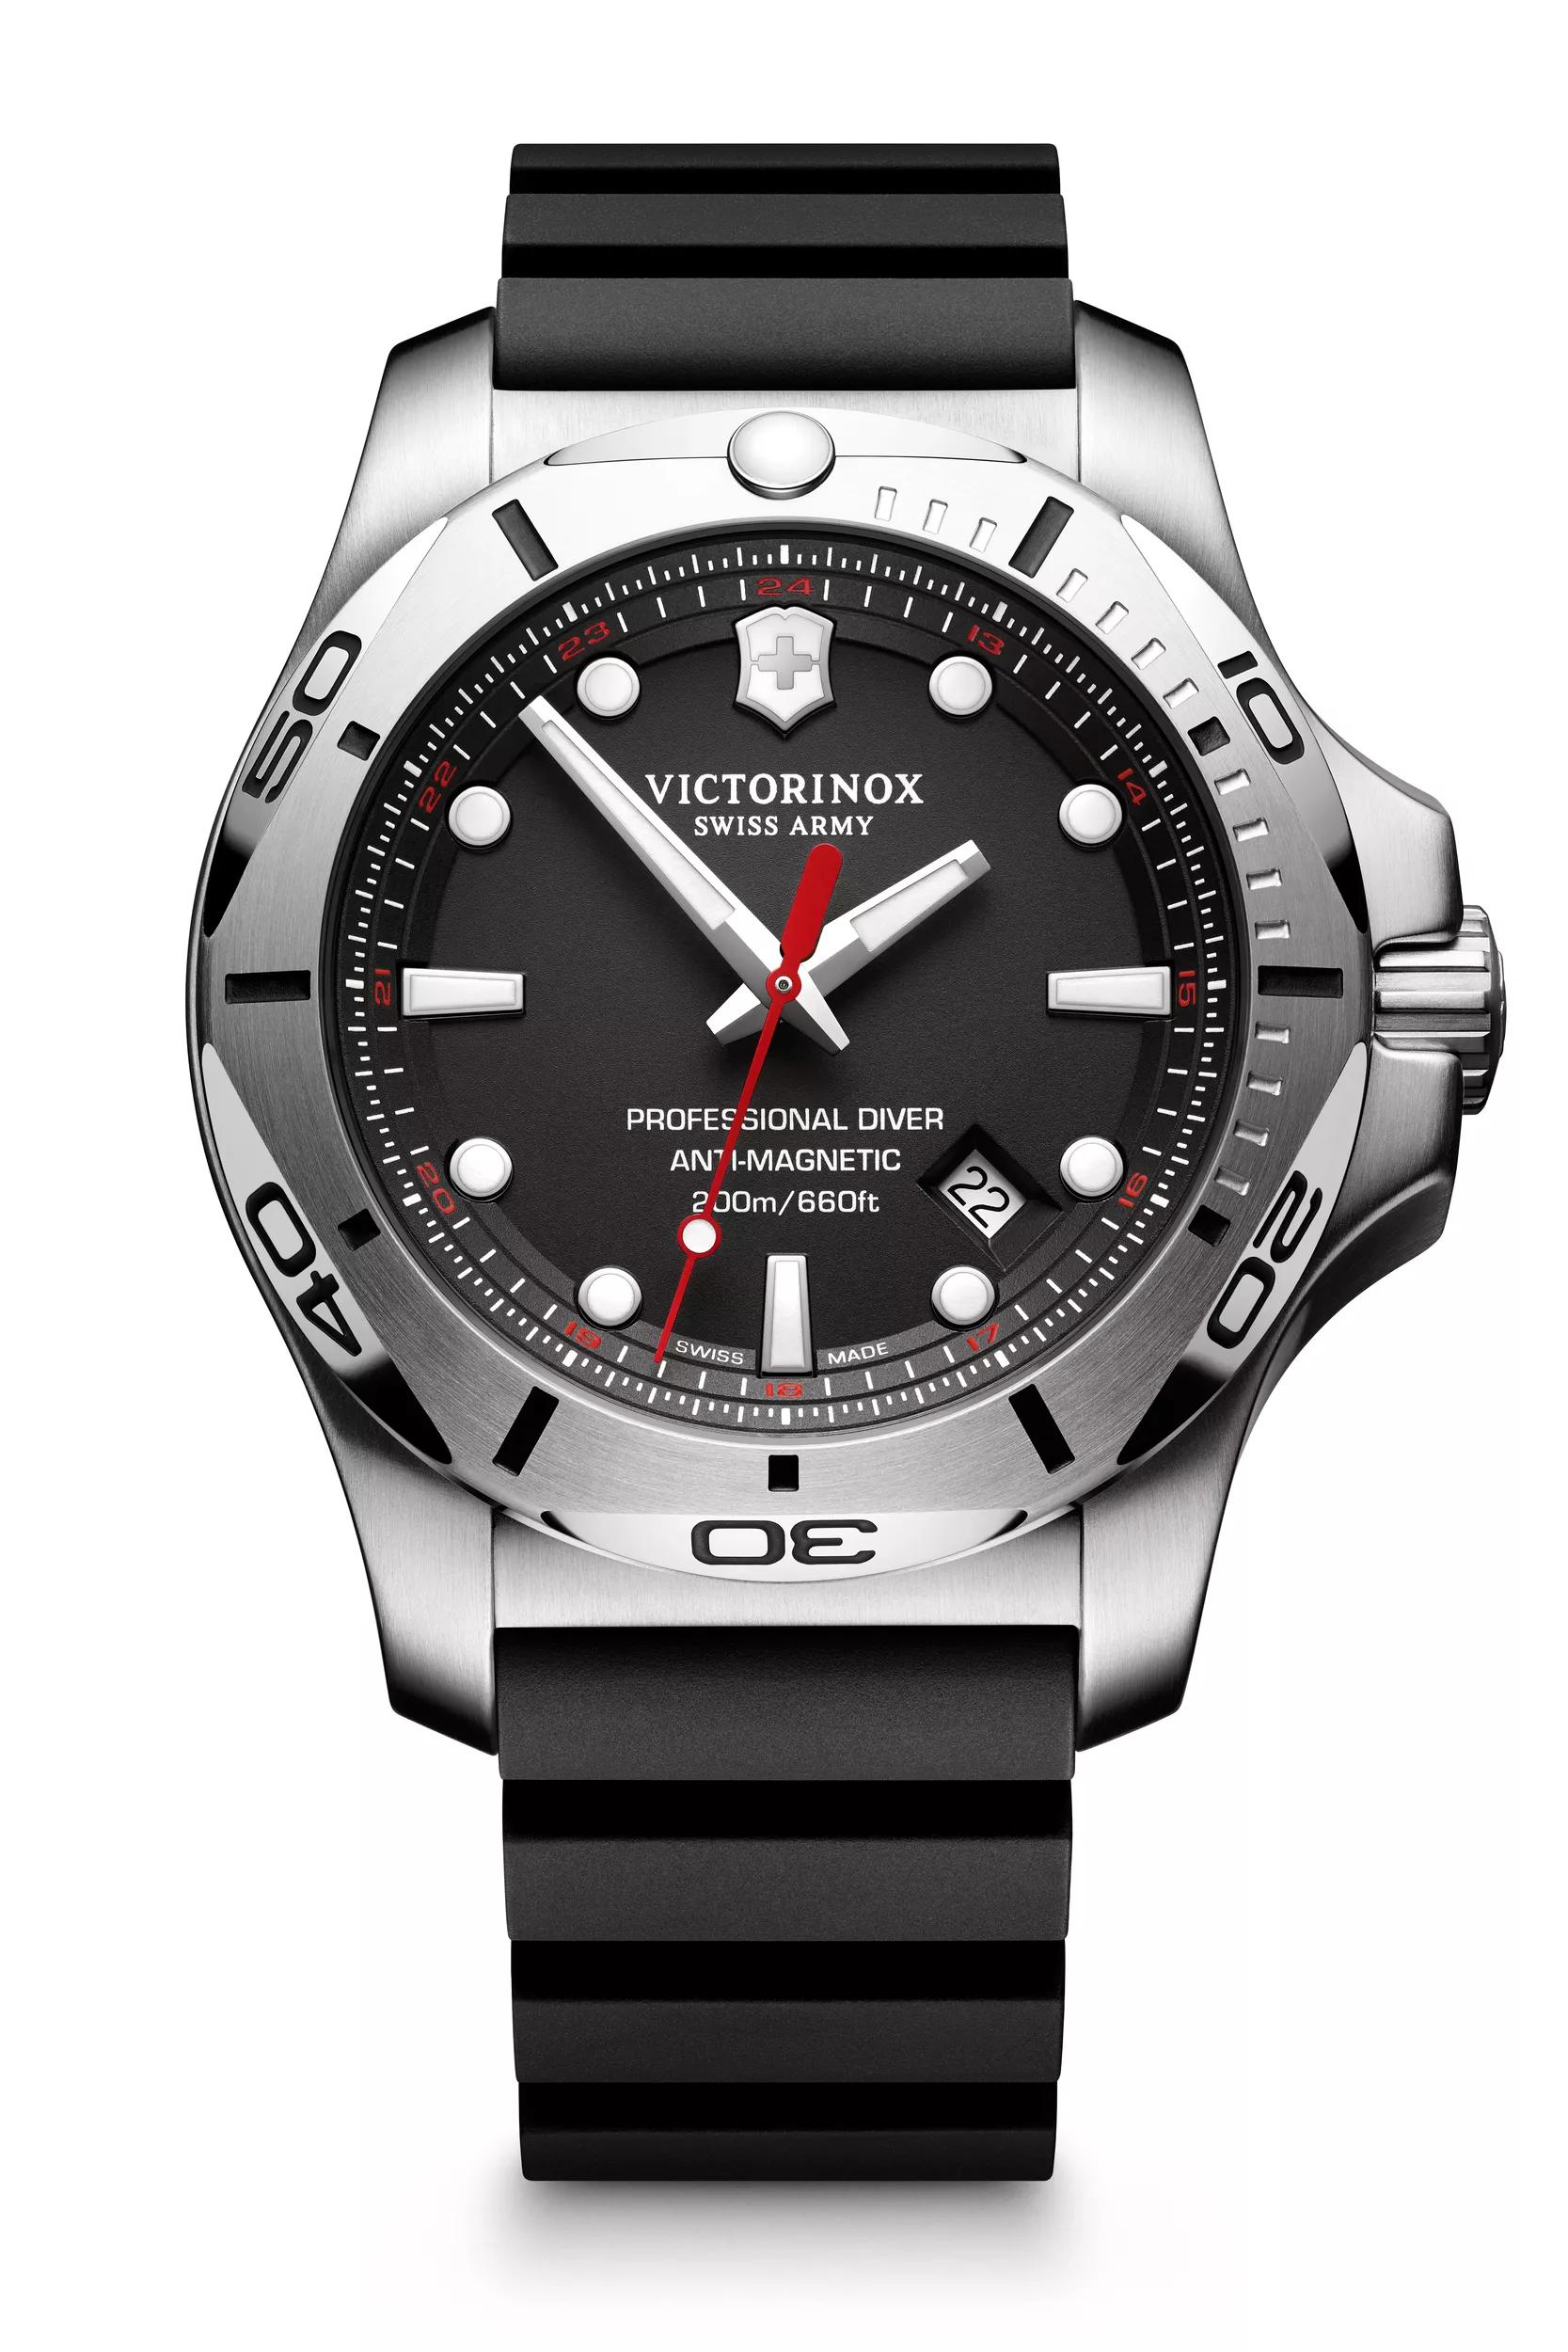 Victorinox 腕時計 241736 赤ダイアル プロダイバー ウォッチカレンダー機能デイト